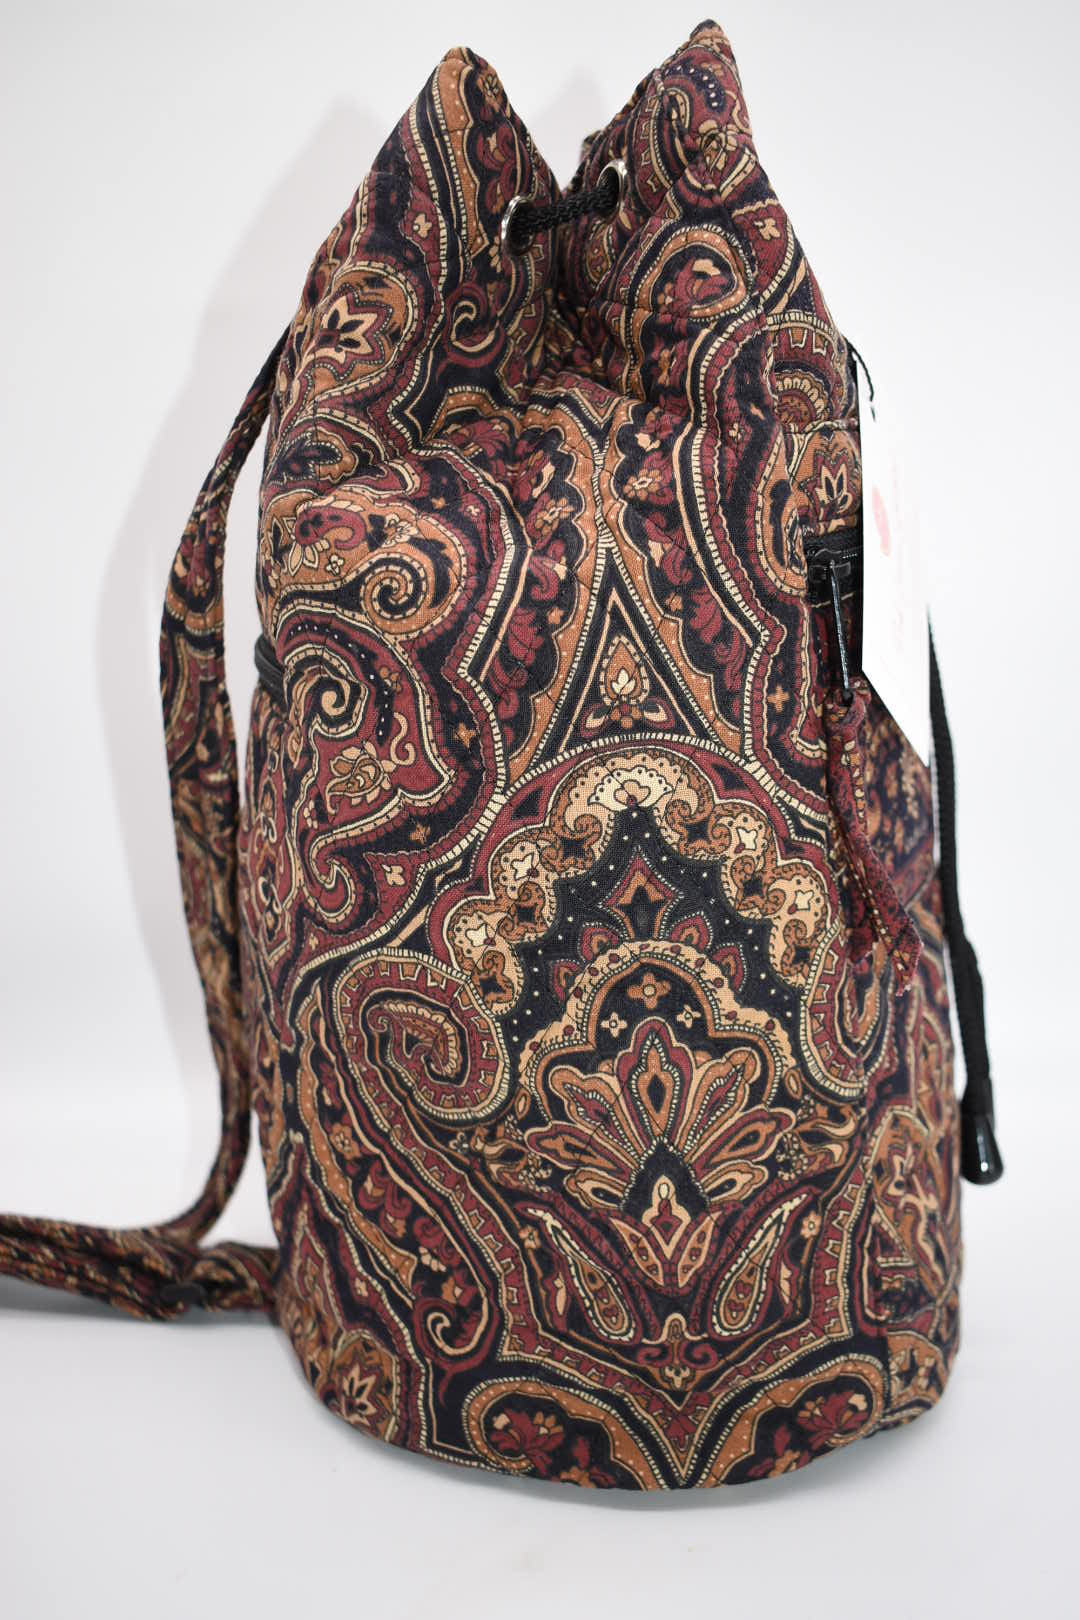 Vintage Vera Bradley Sling Bag in "Mocha - 1996" Pattern